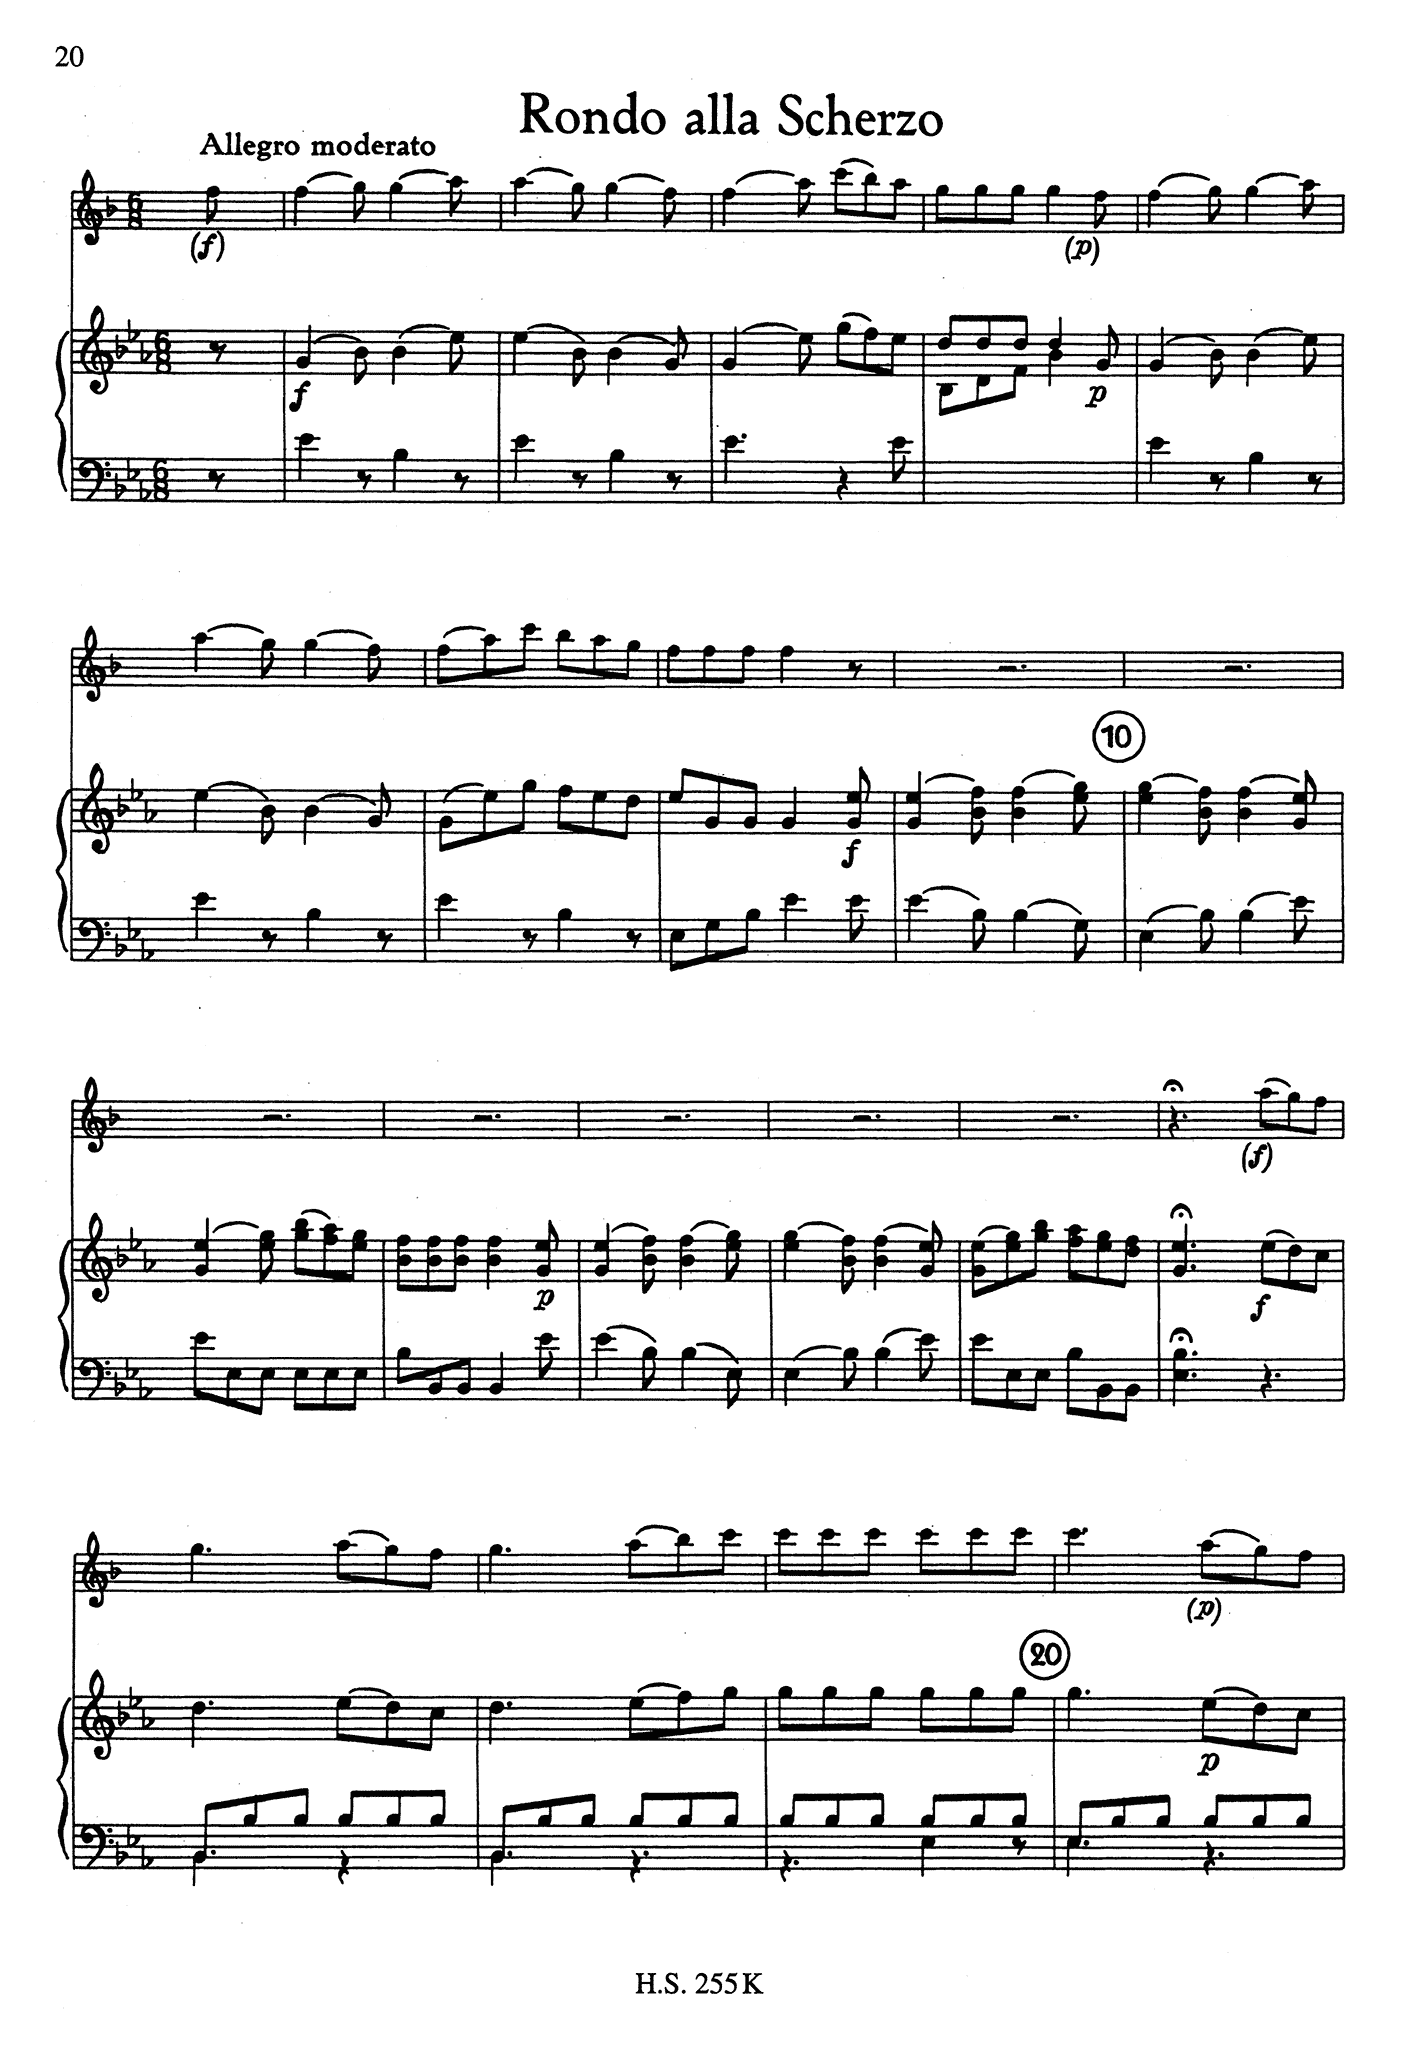 Carl Stamitz Clarinet Concerto No. 11 (Kaiser) in E-flat Major - Movement 3